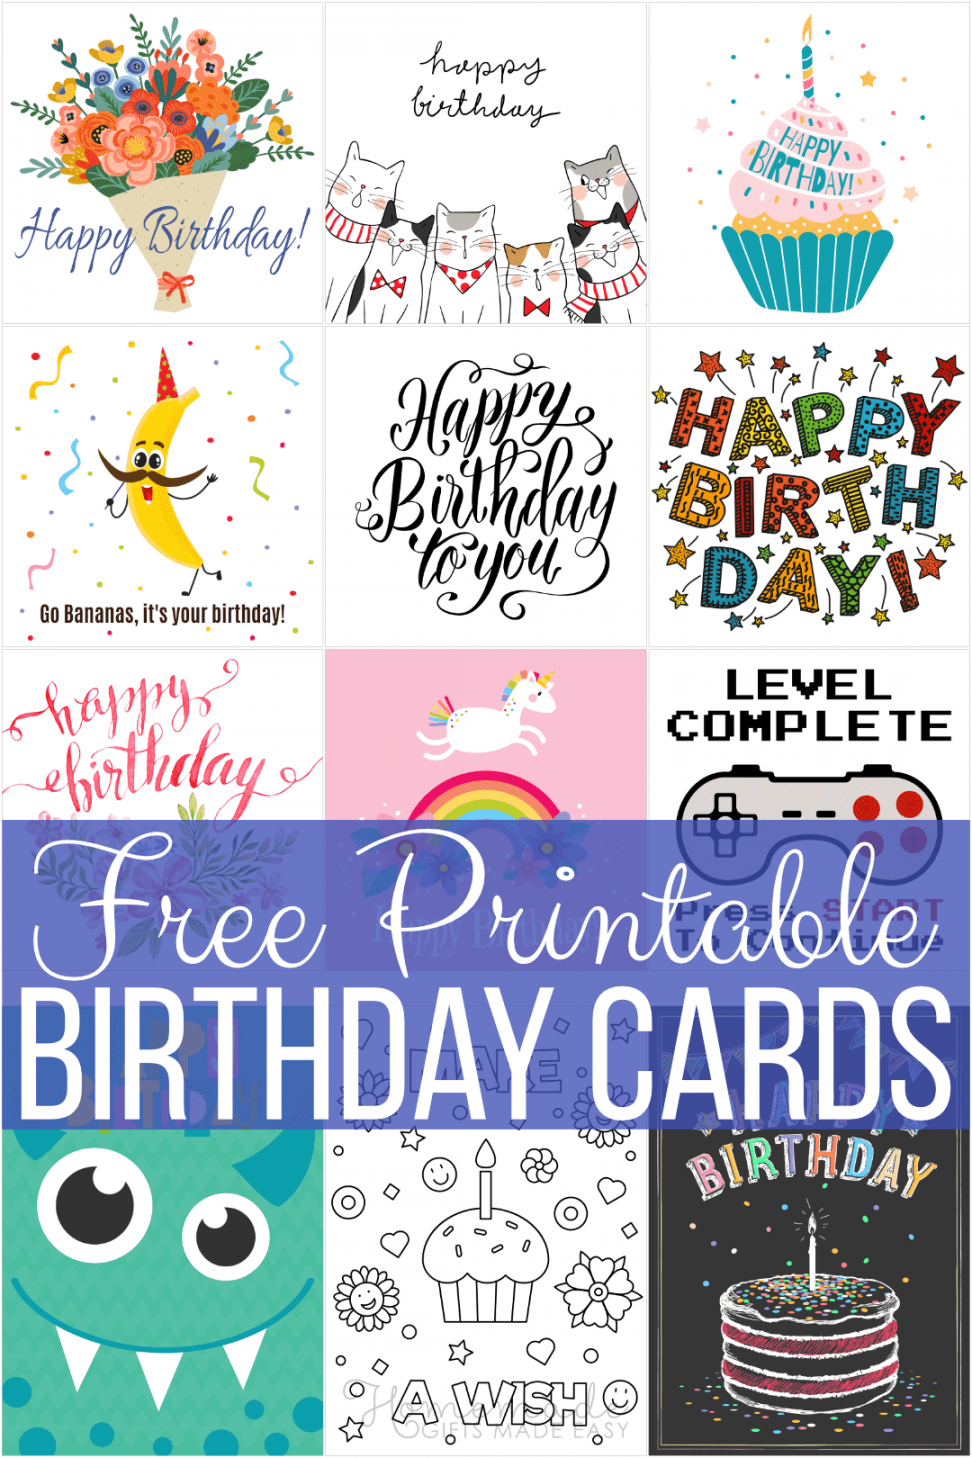 Printable Cards For Free - Printable - Free Printable Birthday Cards for Everyone